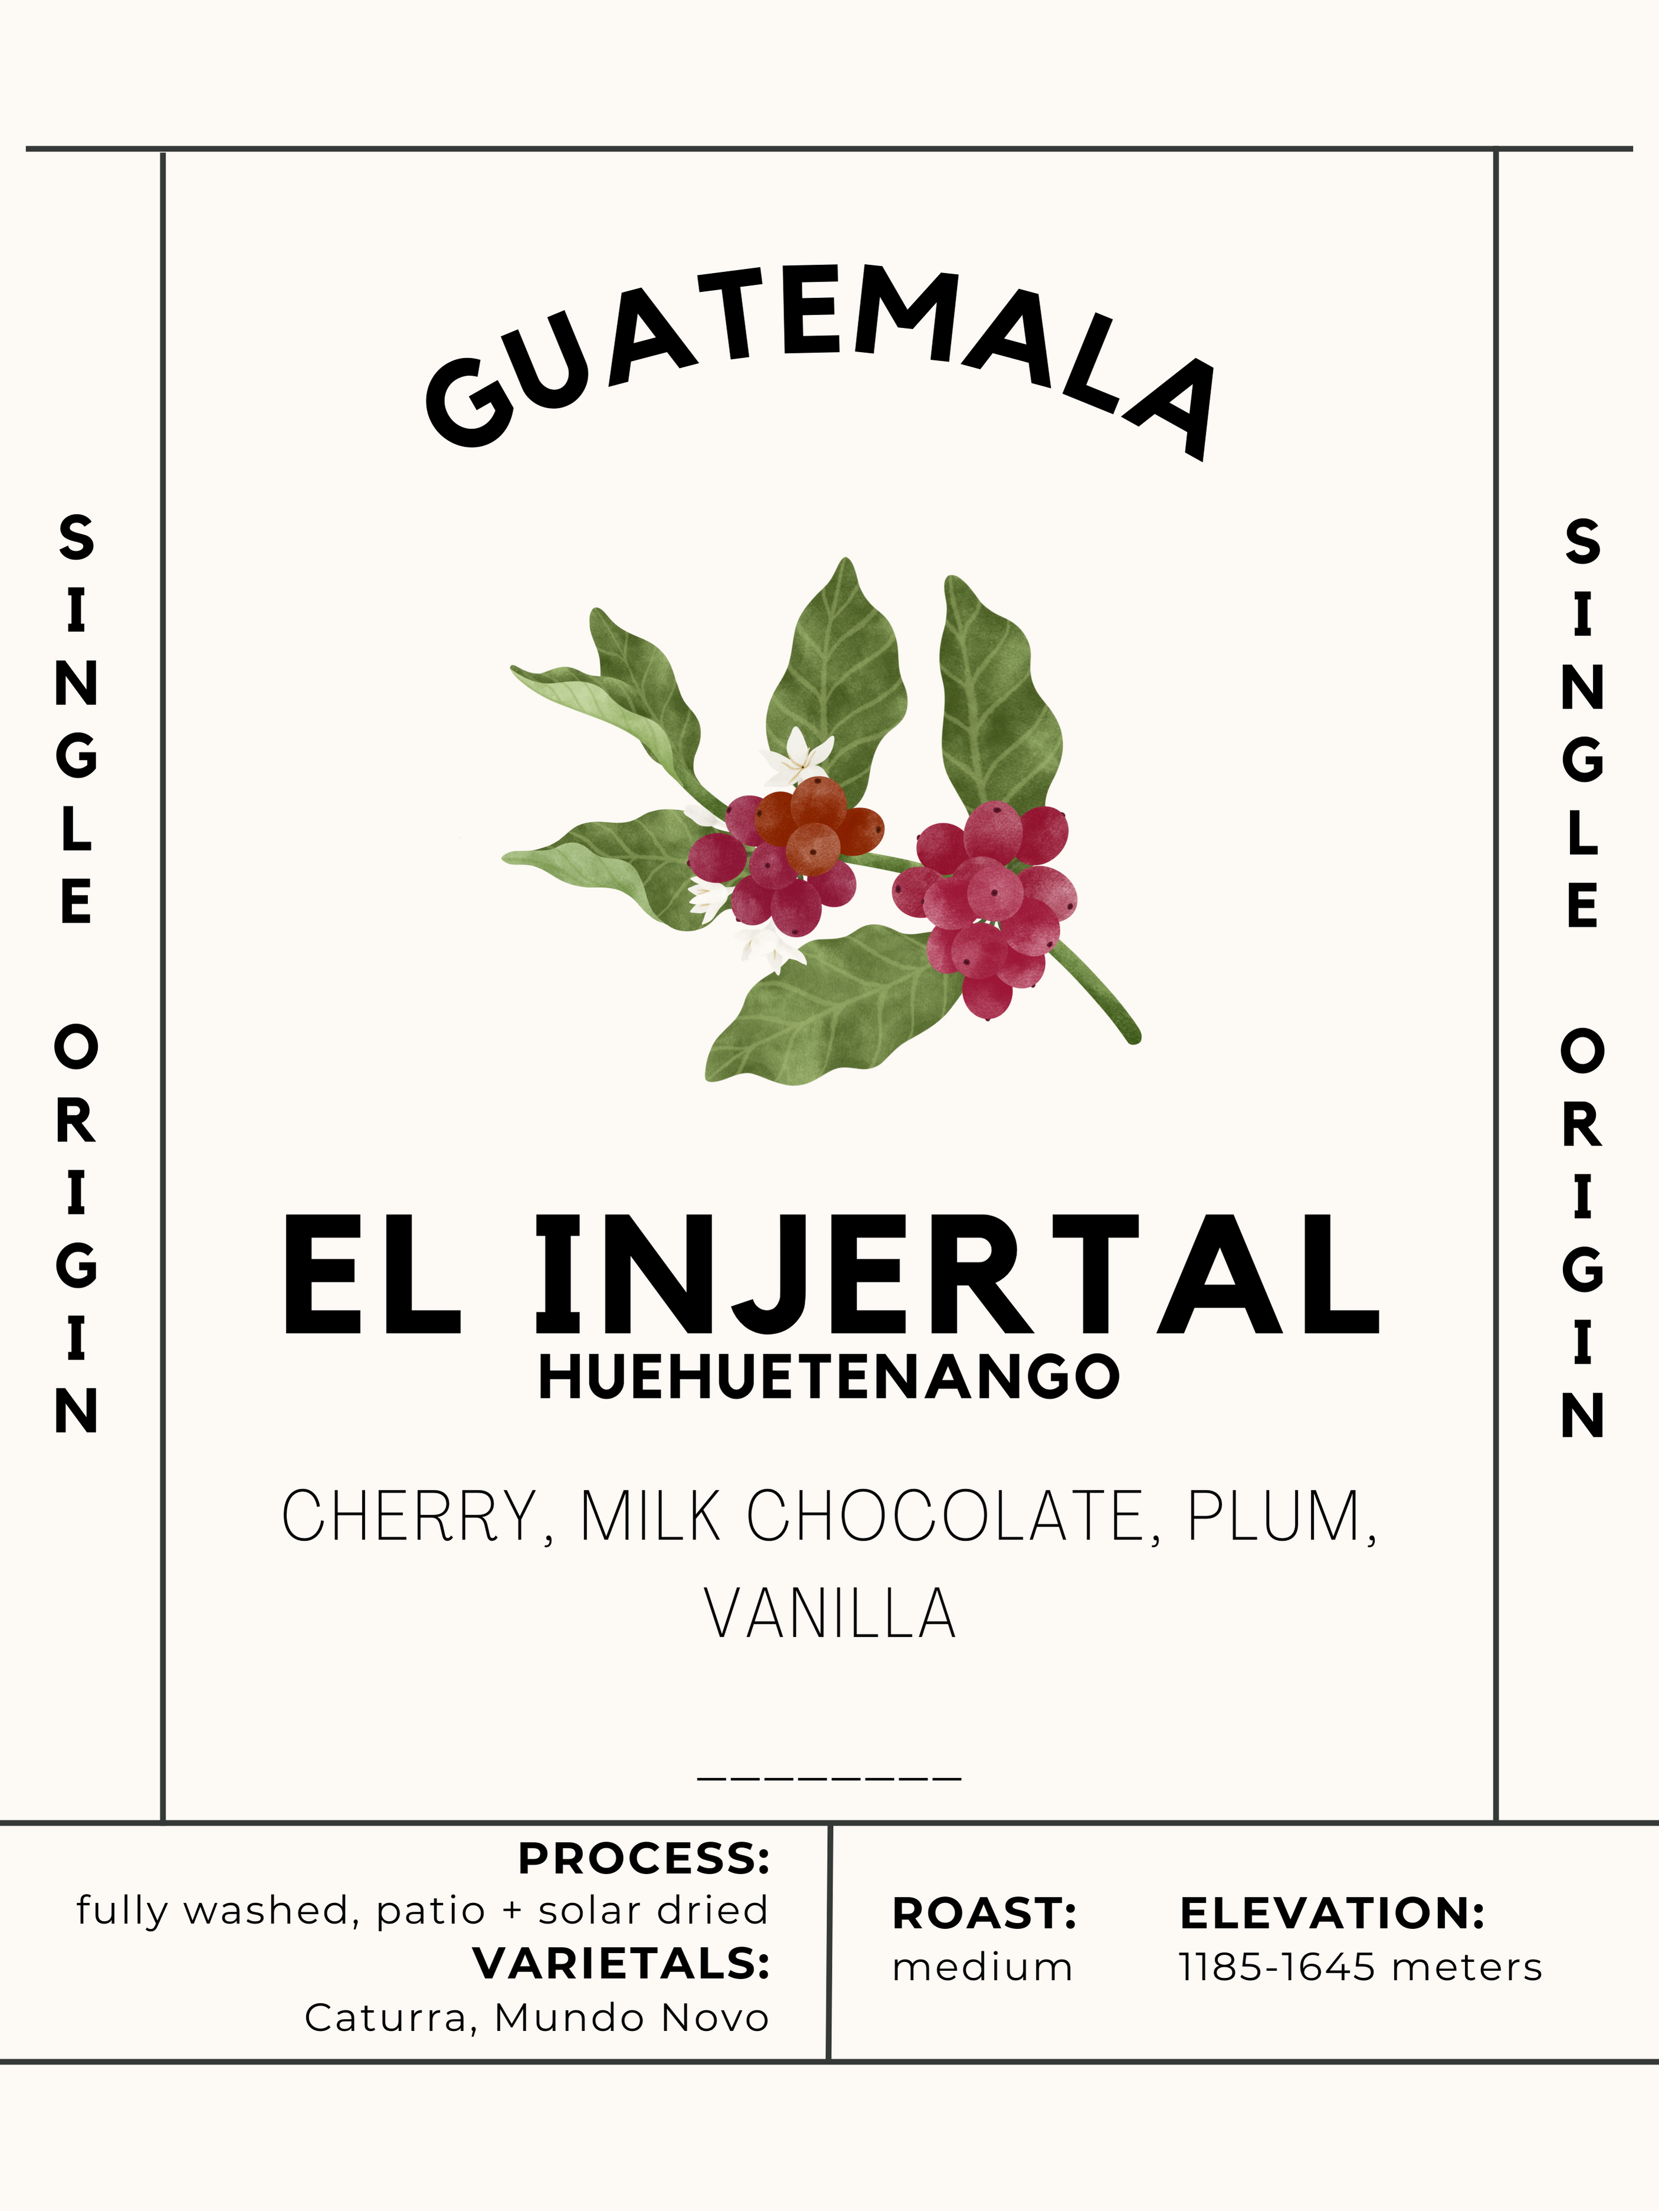 Guatemala Huehuetenango - El Injertal - Jaho Coffee Roaster